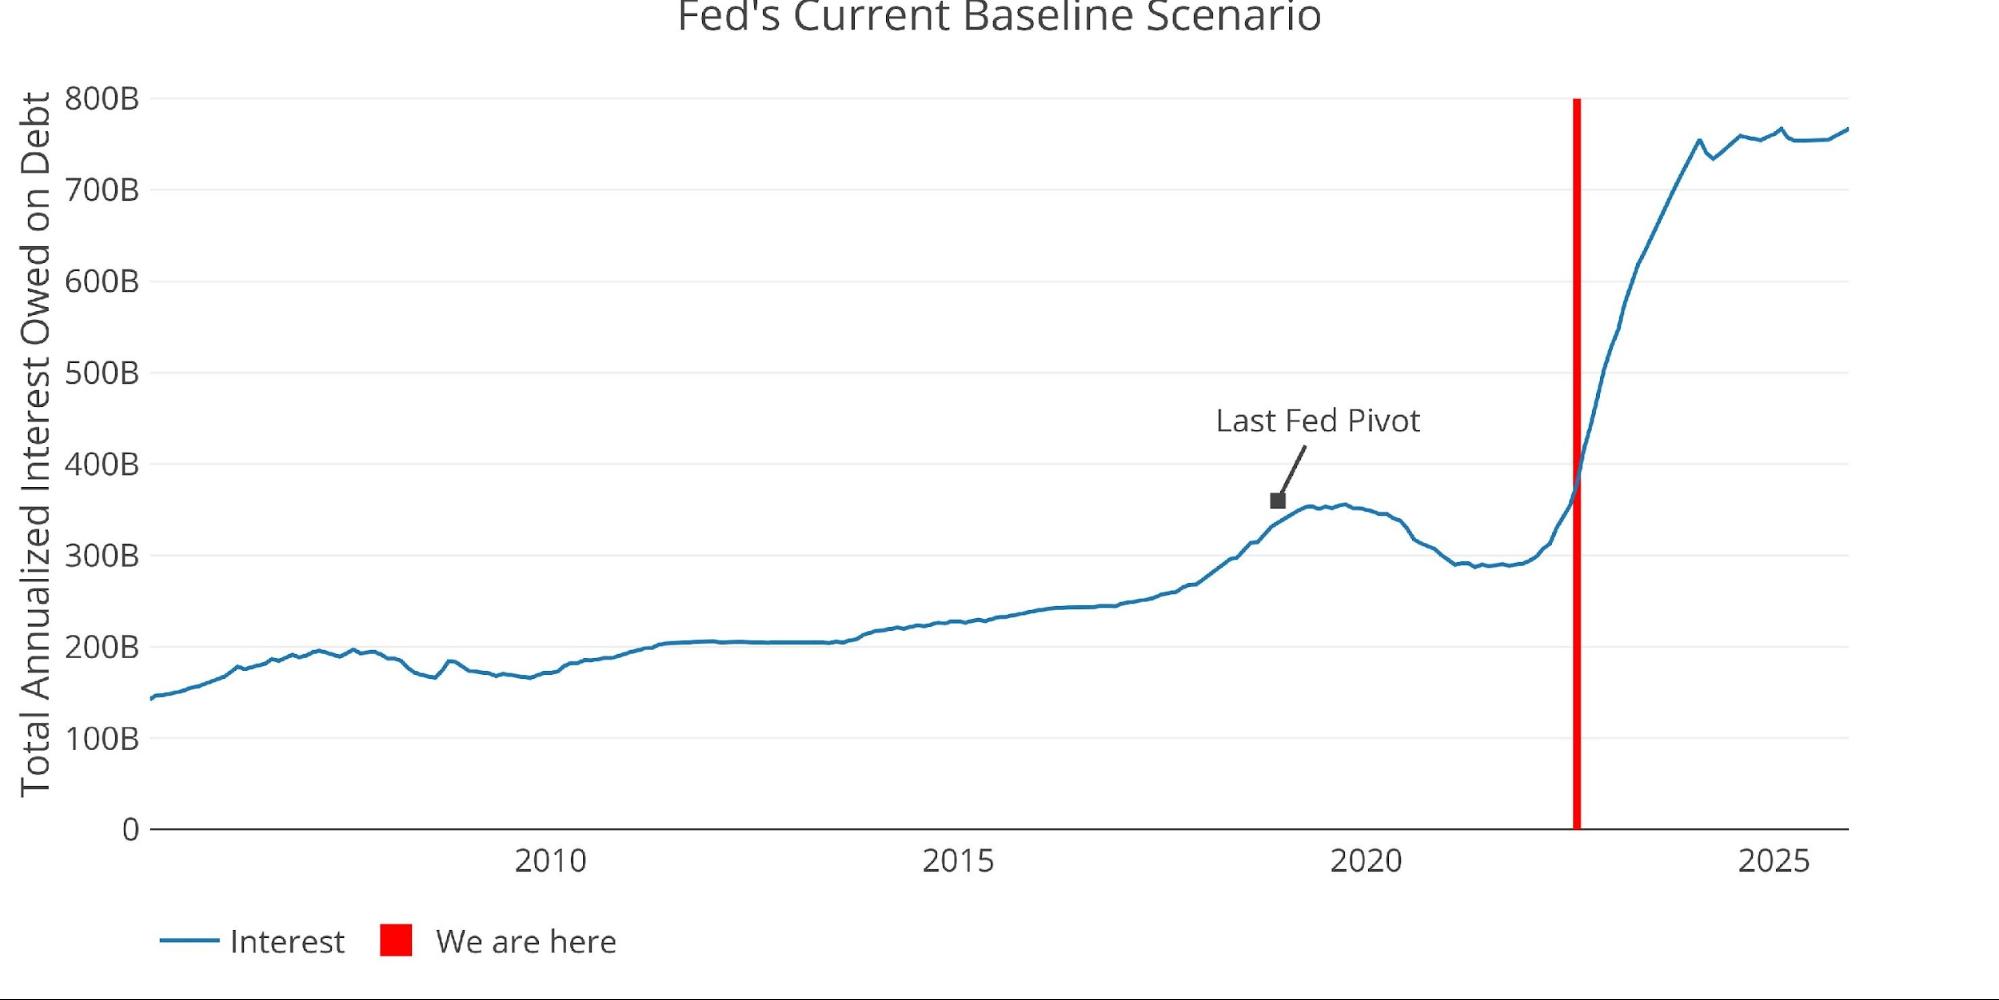 FIGURE 2: Fed's Current Baseline Scenario